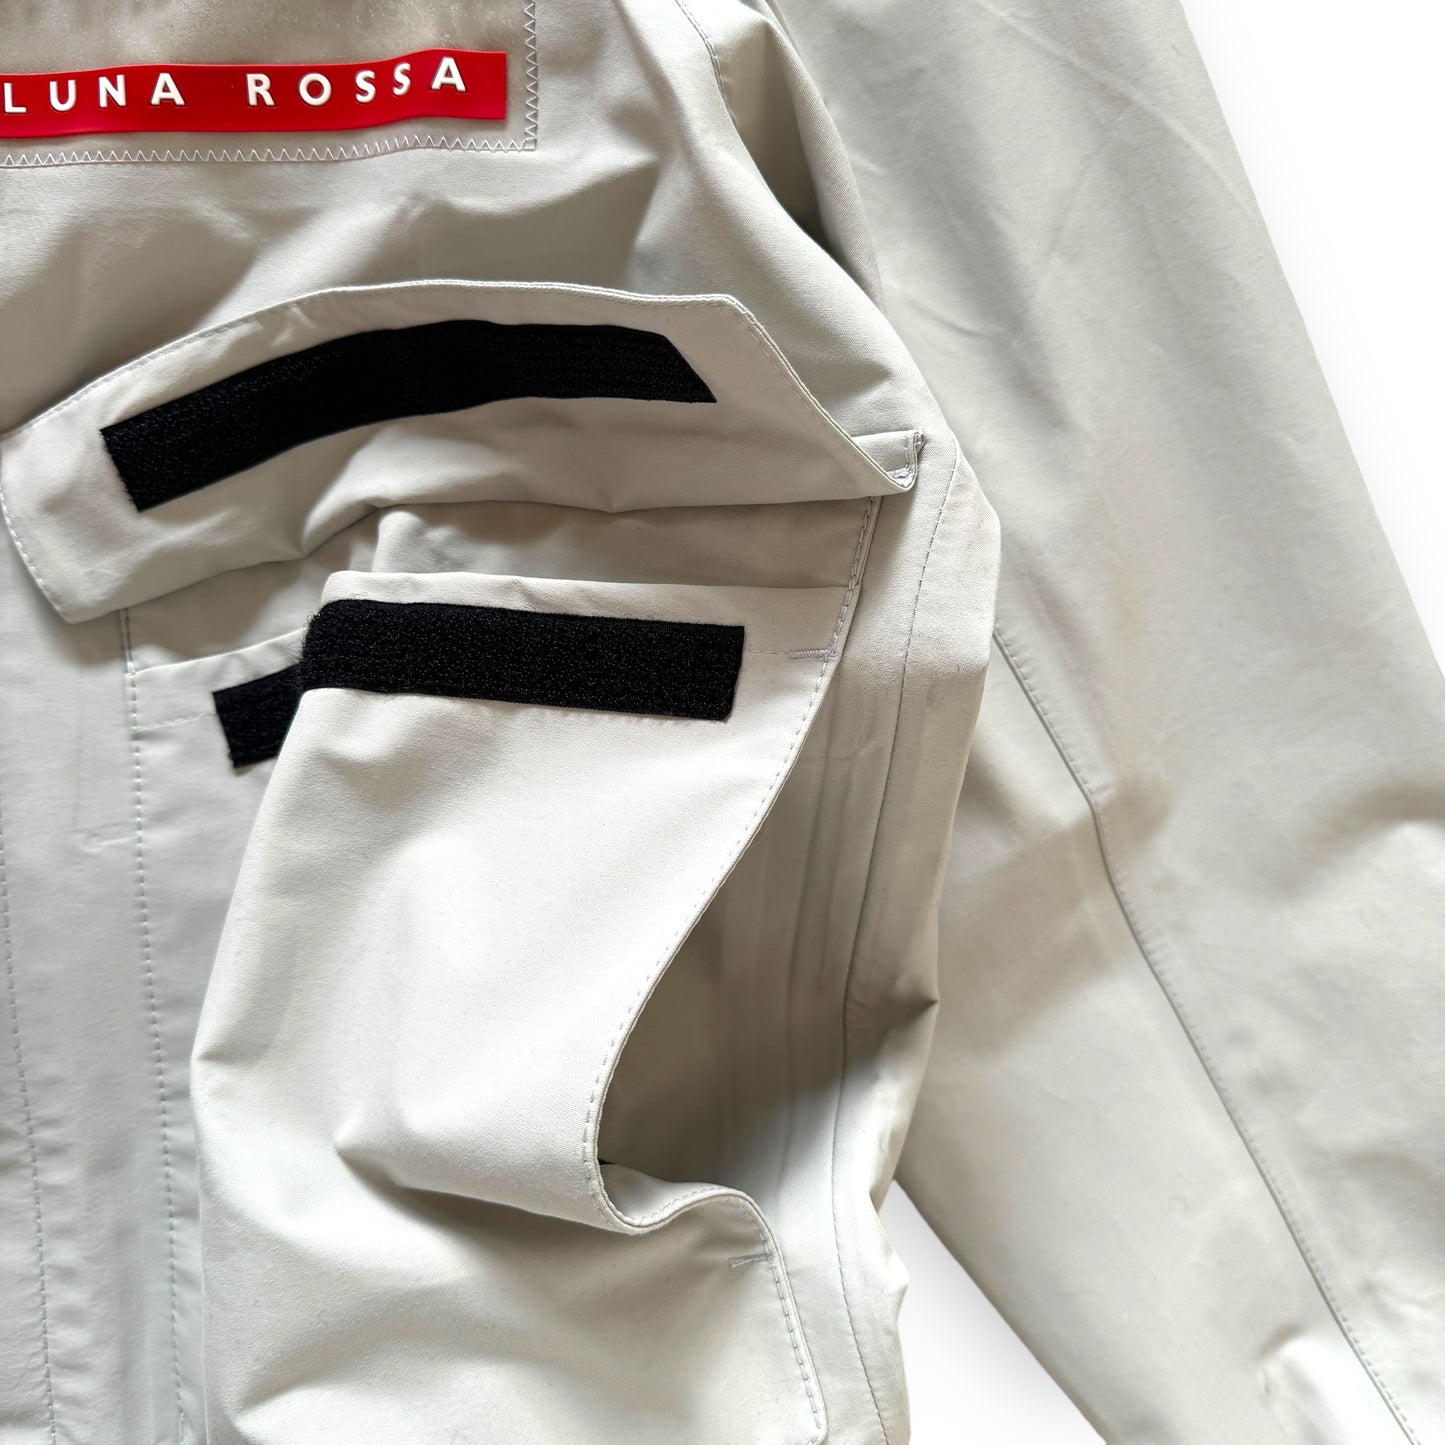 Prada Luna Rossa Challenge Jacket - 2003 Team Member Exclusive - BNWT